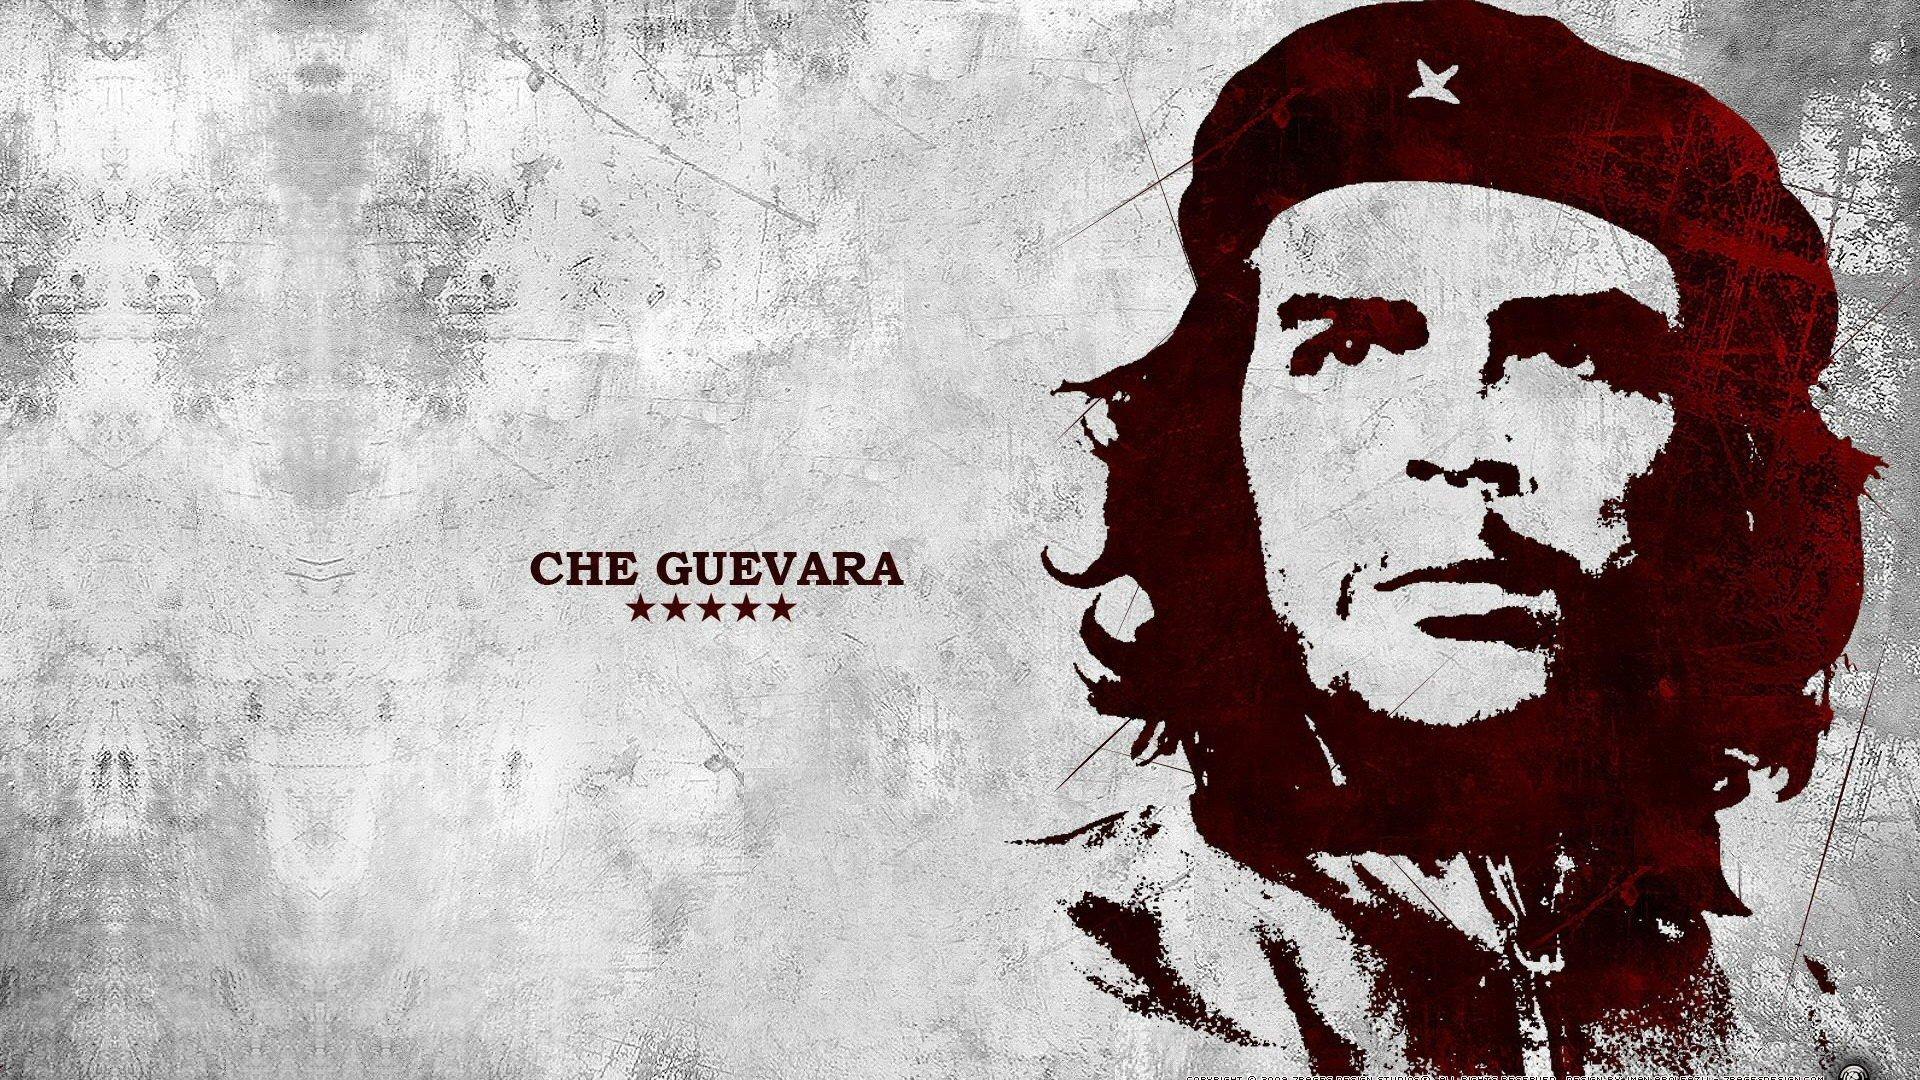 Wallpaper, 1920x1080 px, Argentina, che, Commander, Cuba, freedom